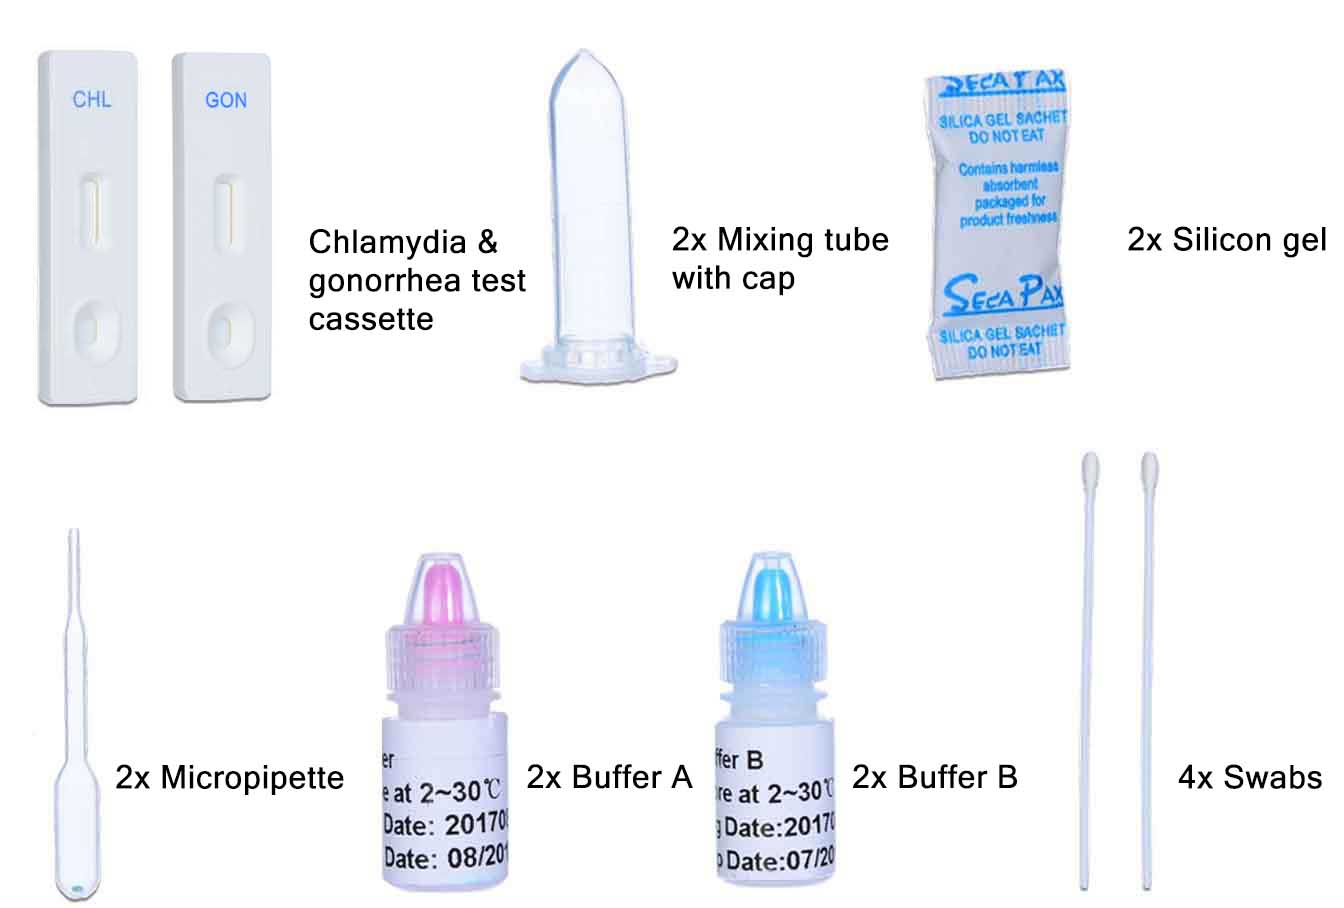 Chlamydia + Gonorrhea Rapid Test Kit